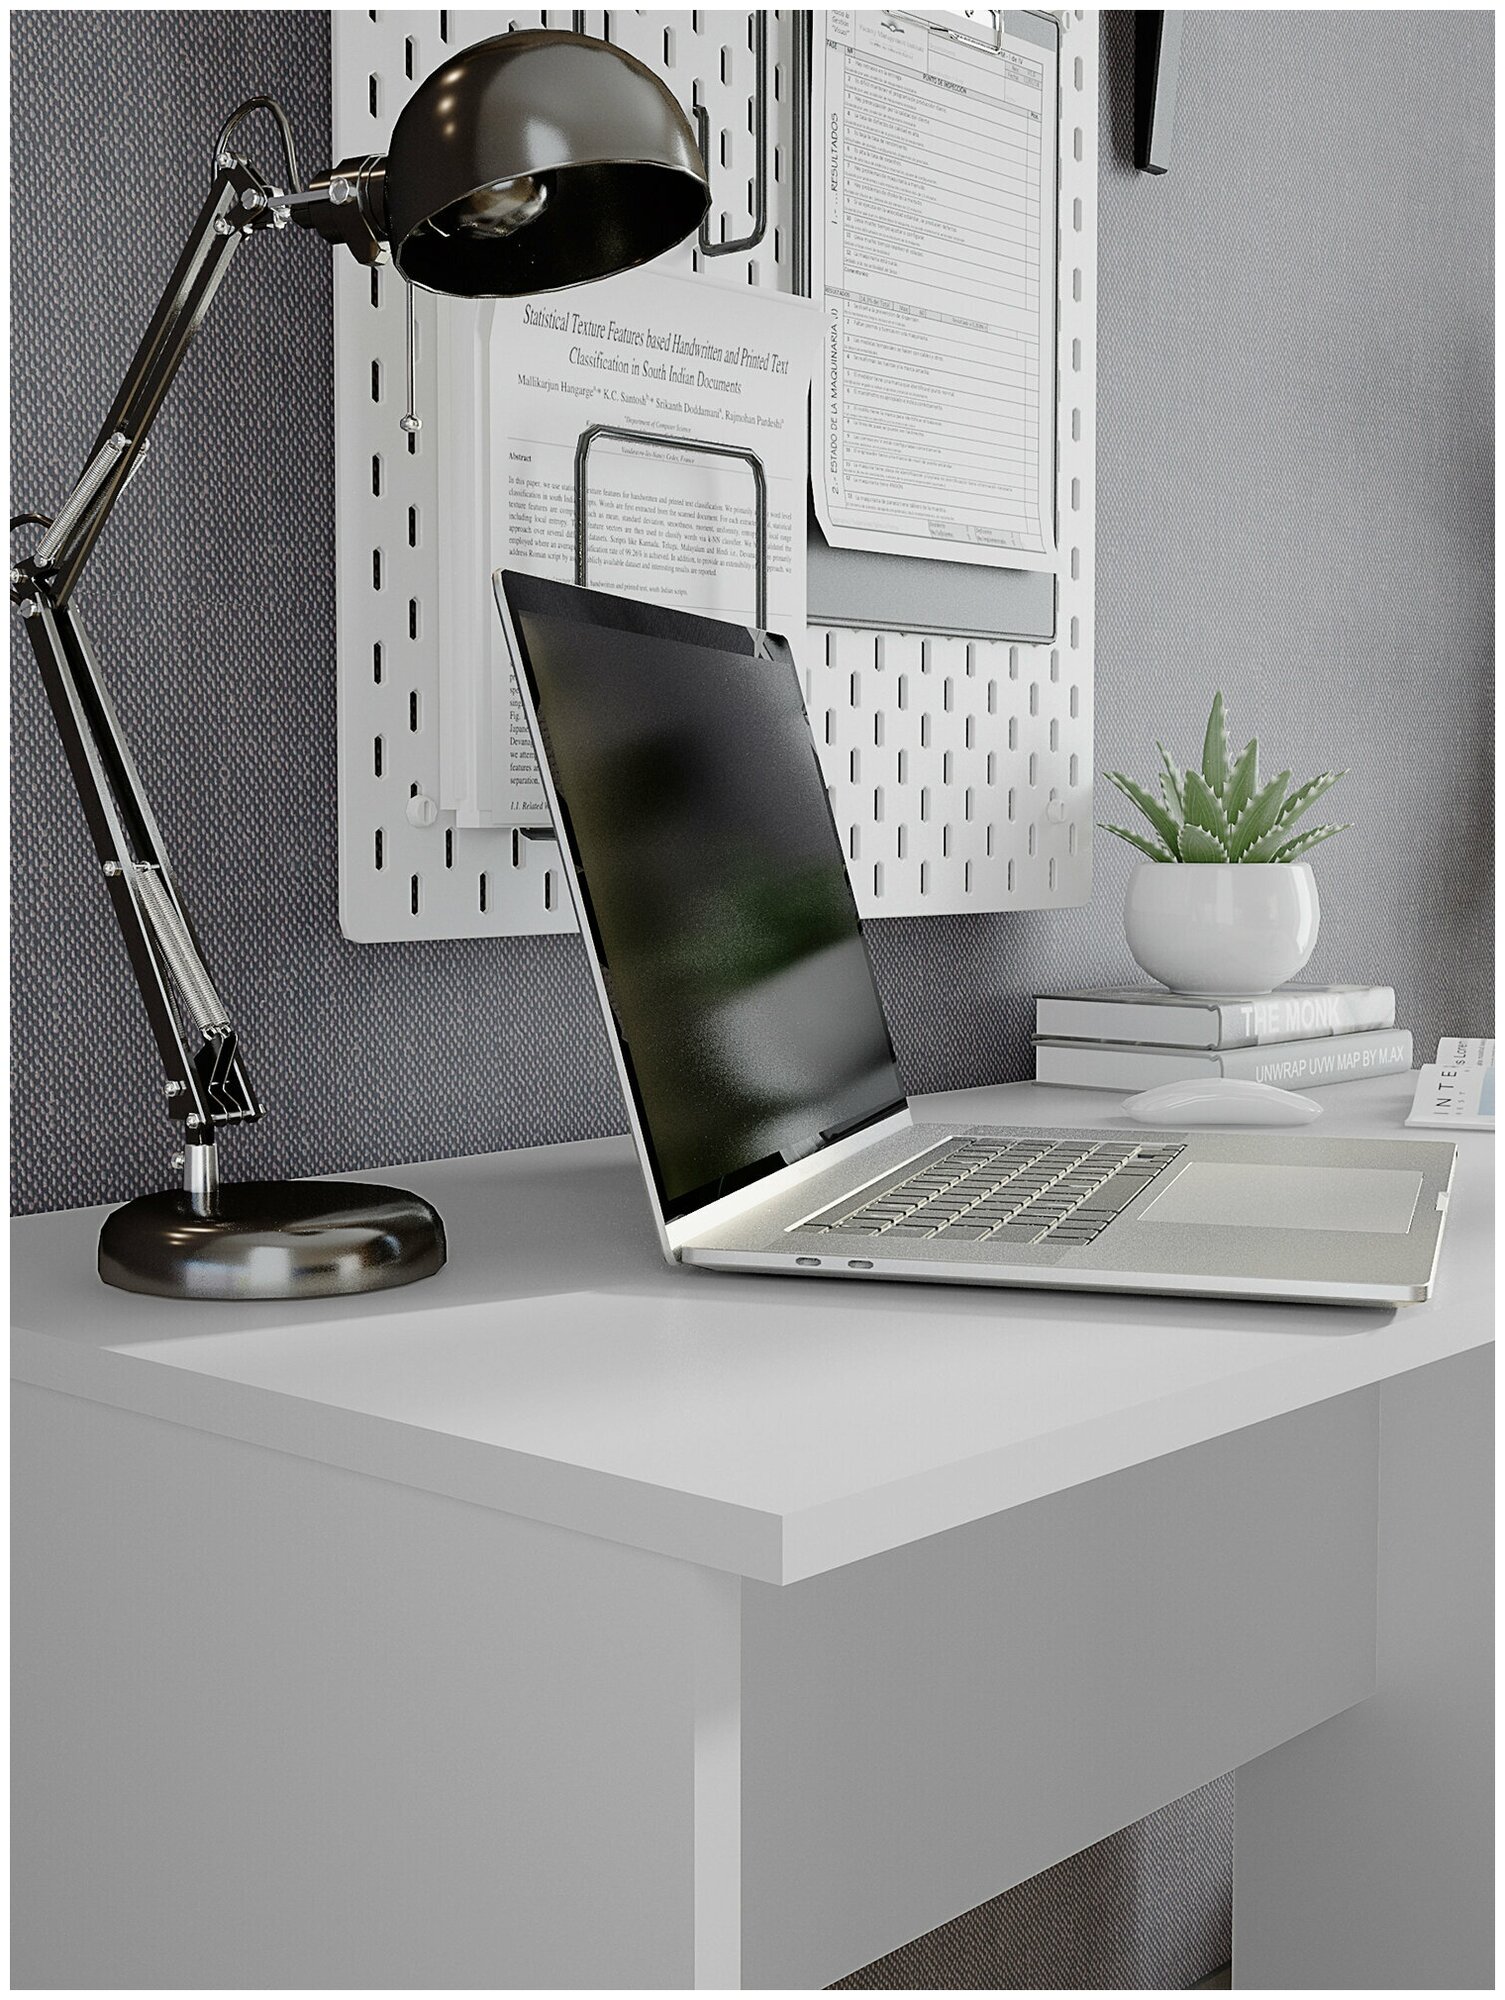 Письменный стол, компьютерный стол Beneli алекс, Белый, 100х50х76,2 см, 1 шт.